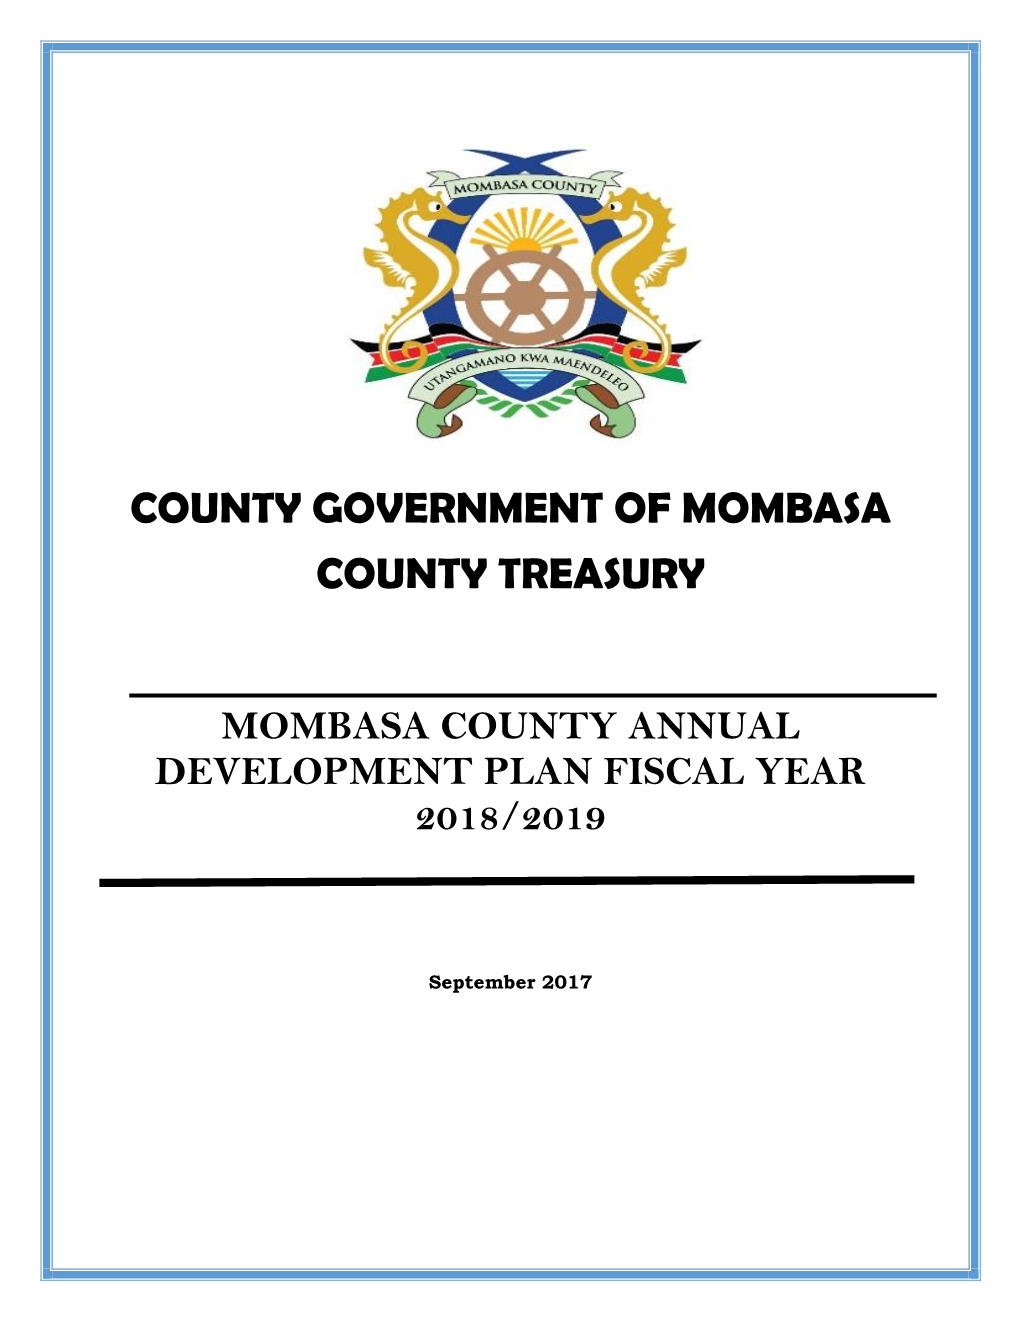 County Government of Mombasa County Treasury